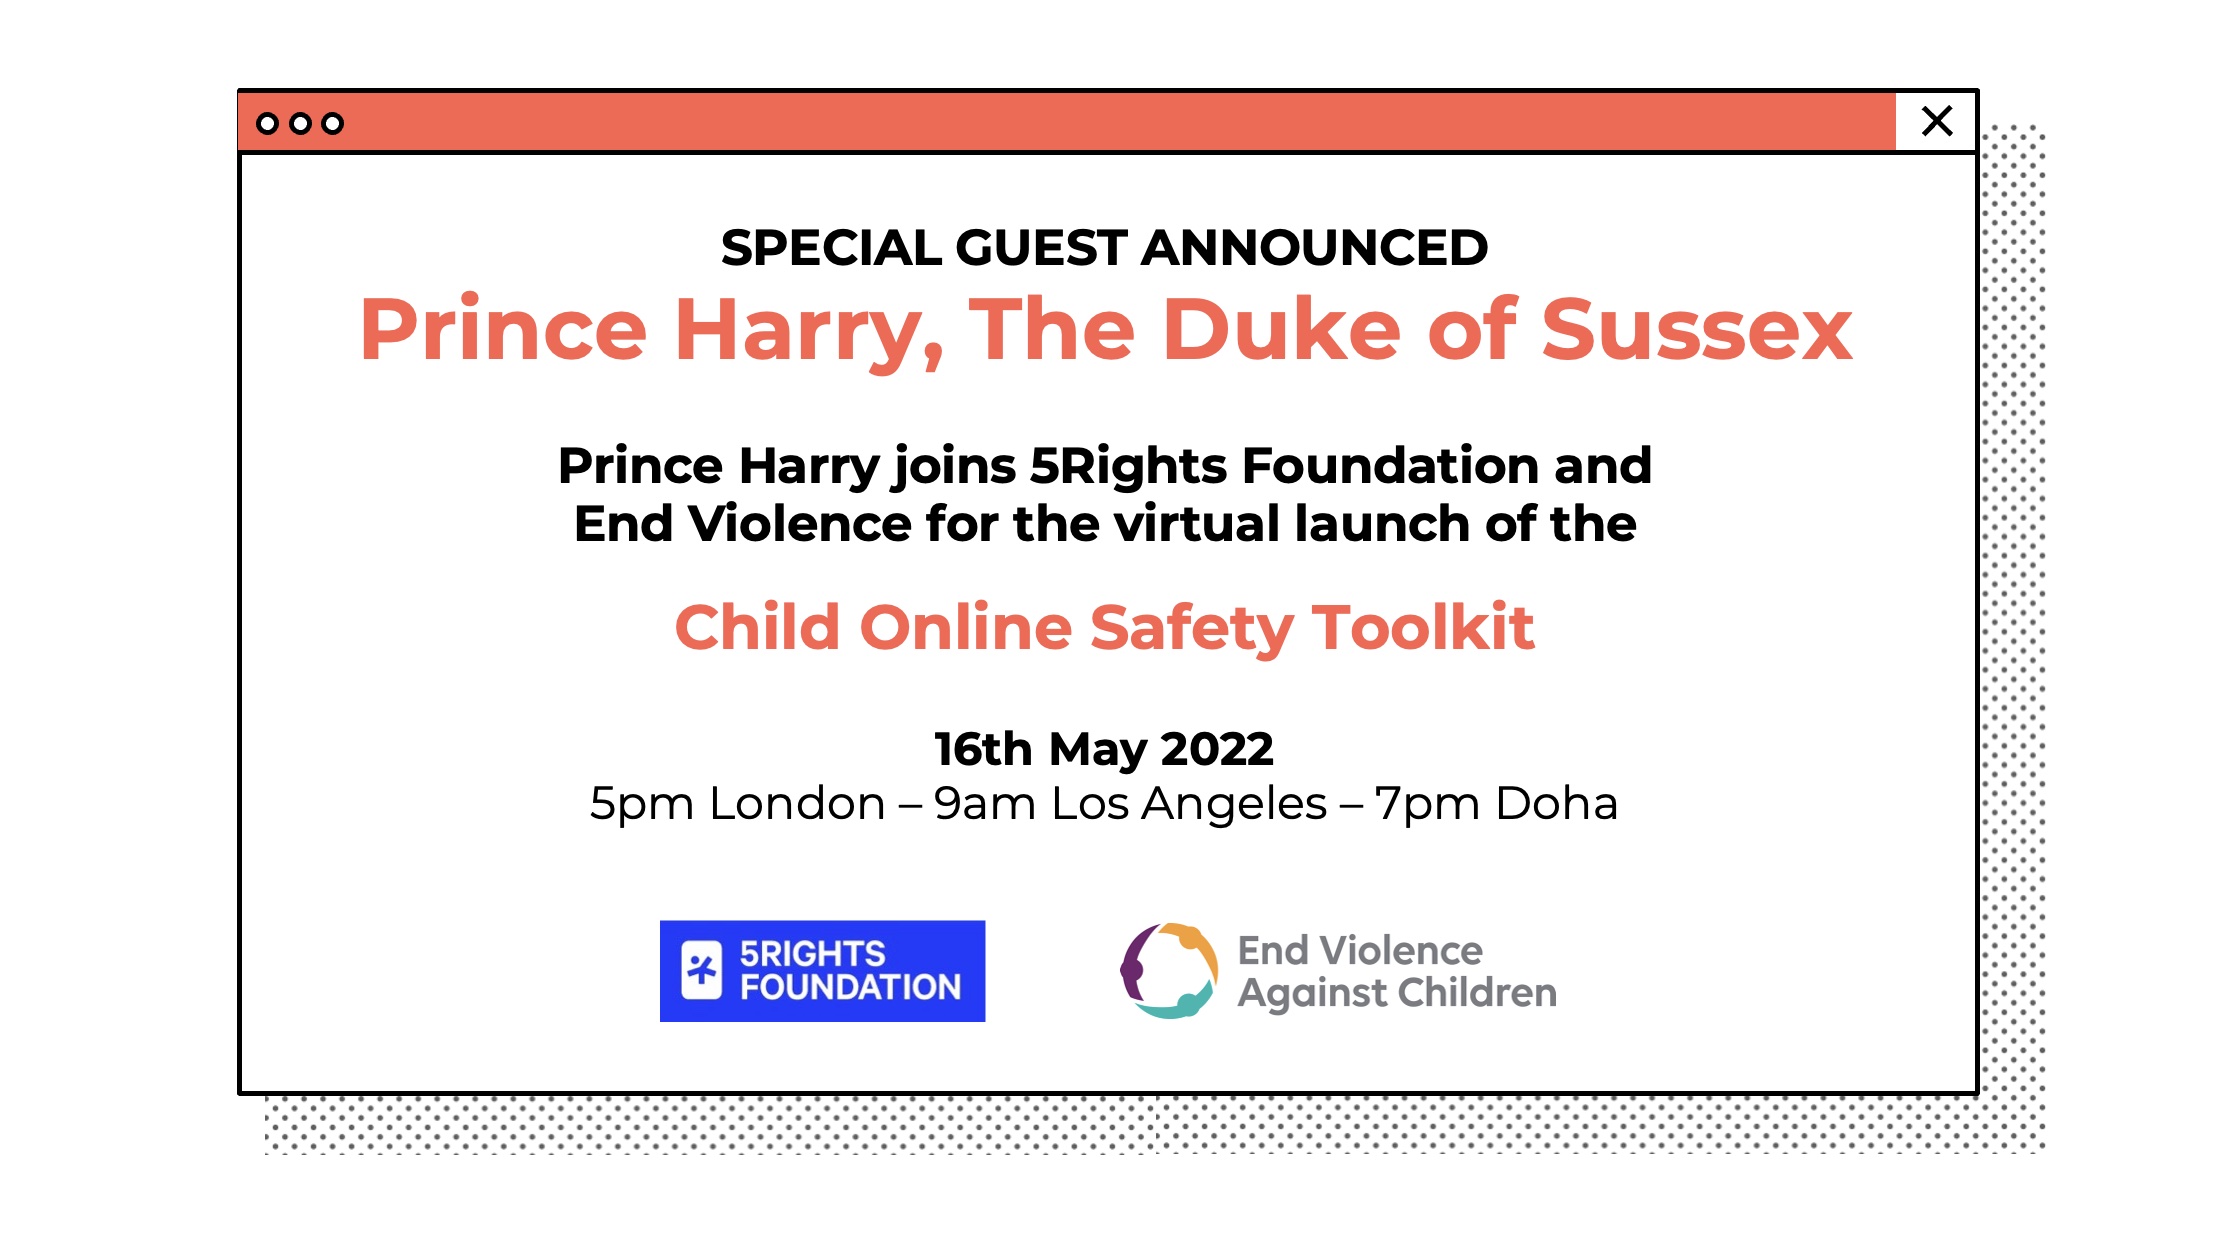 Prince Harry to speak on child online safety